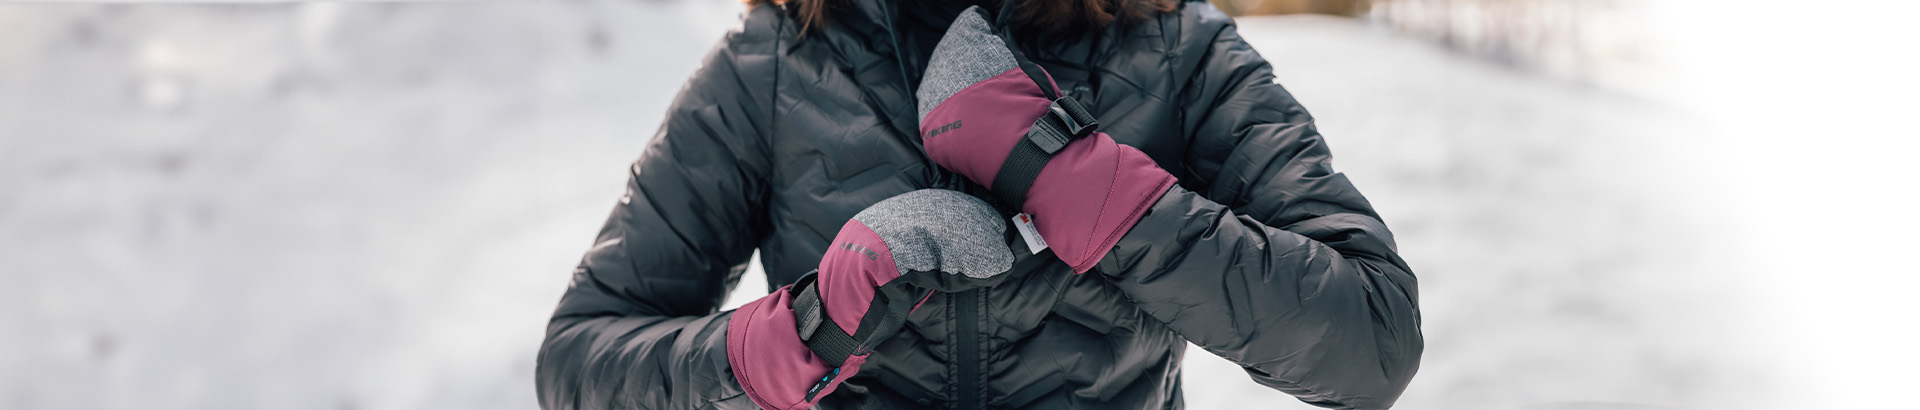 Woman's Winter Gloves